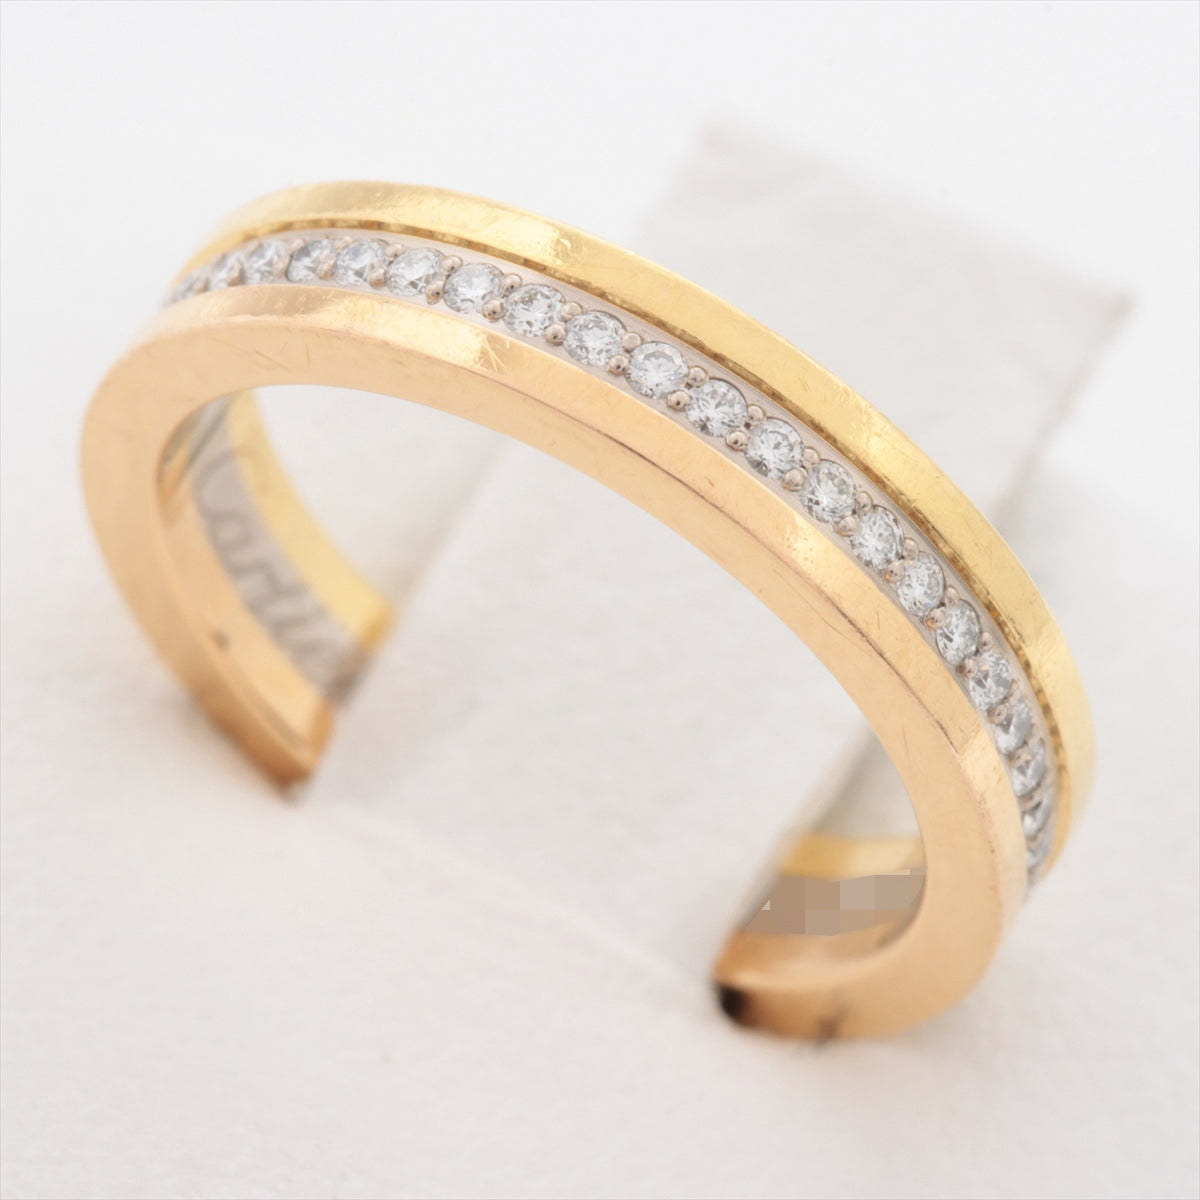 Cartier Three-Color Full Eternity Diamond Ring 750 (YGPG×WG) 4.1g 47 84052947